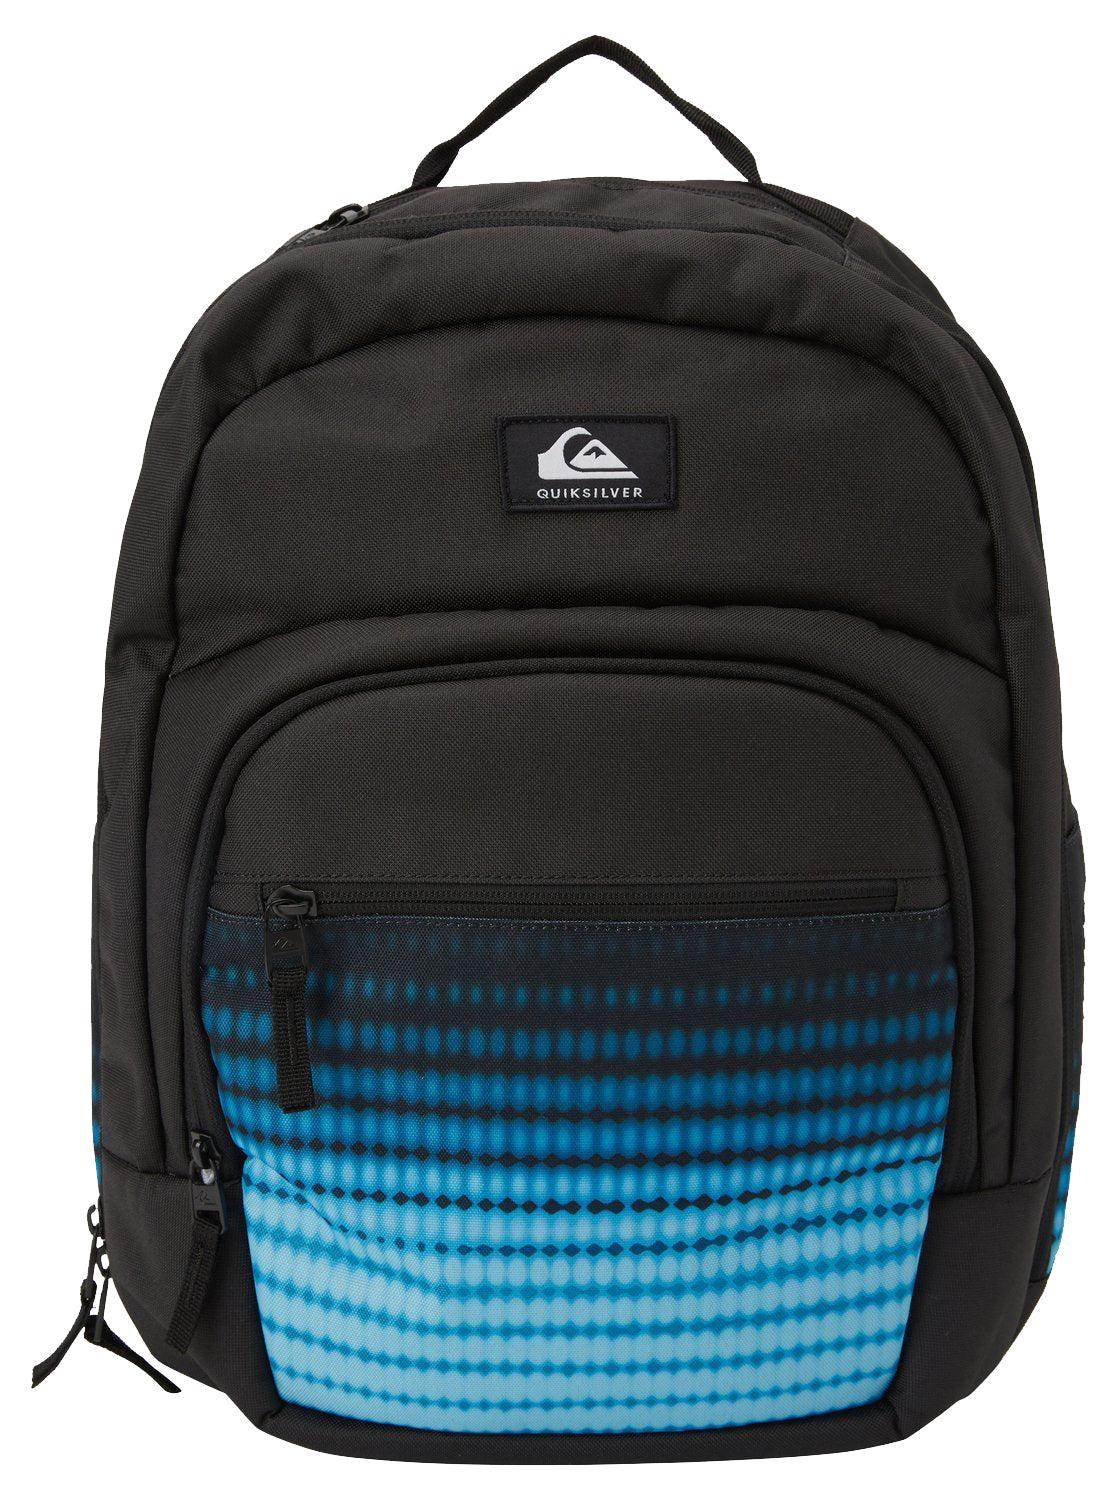 Quiksilver Schoolie Cooler 25L Backpack BGZ0 OS